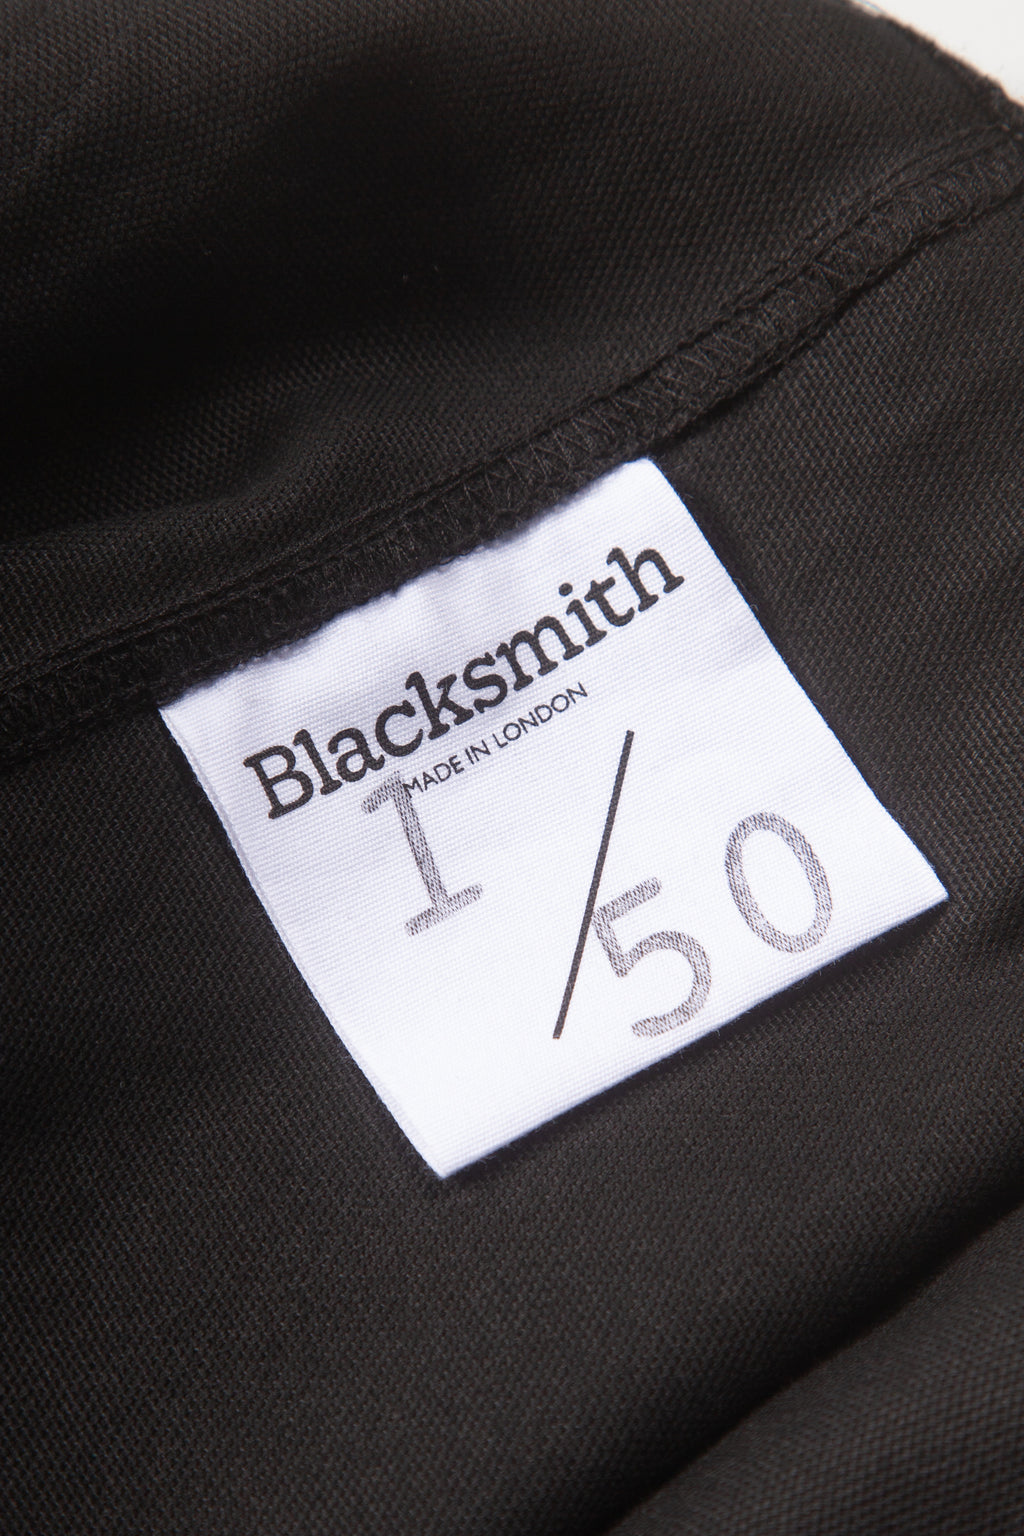 Blacksmith - 001 Canvas Smock - Black | Blacksmith Store